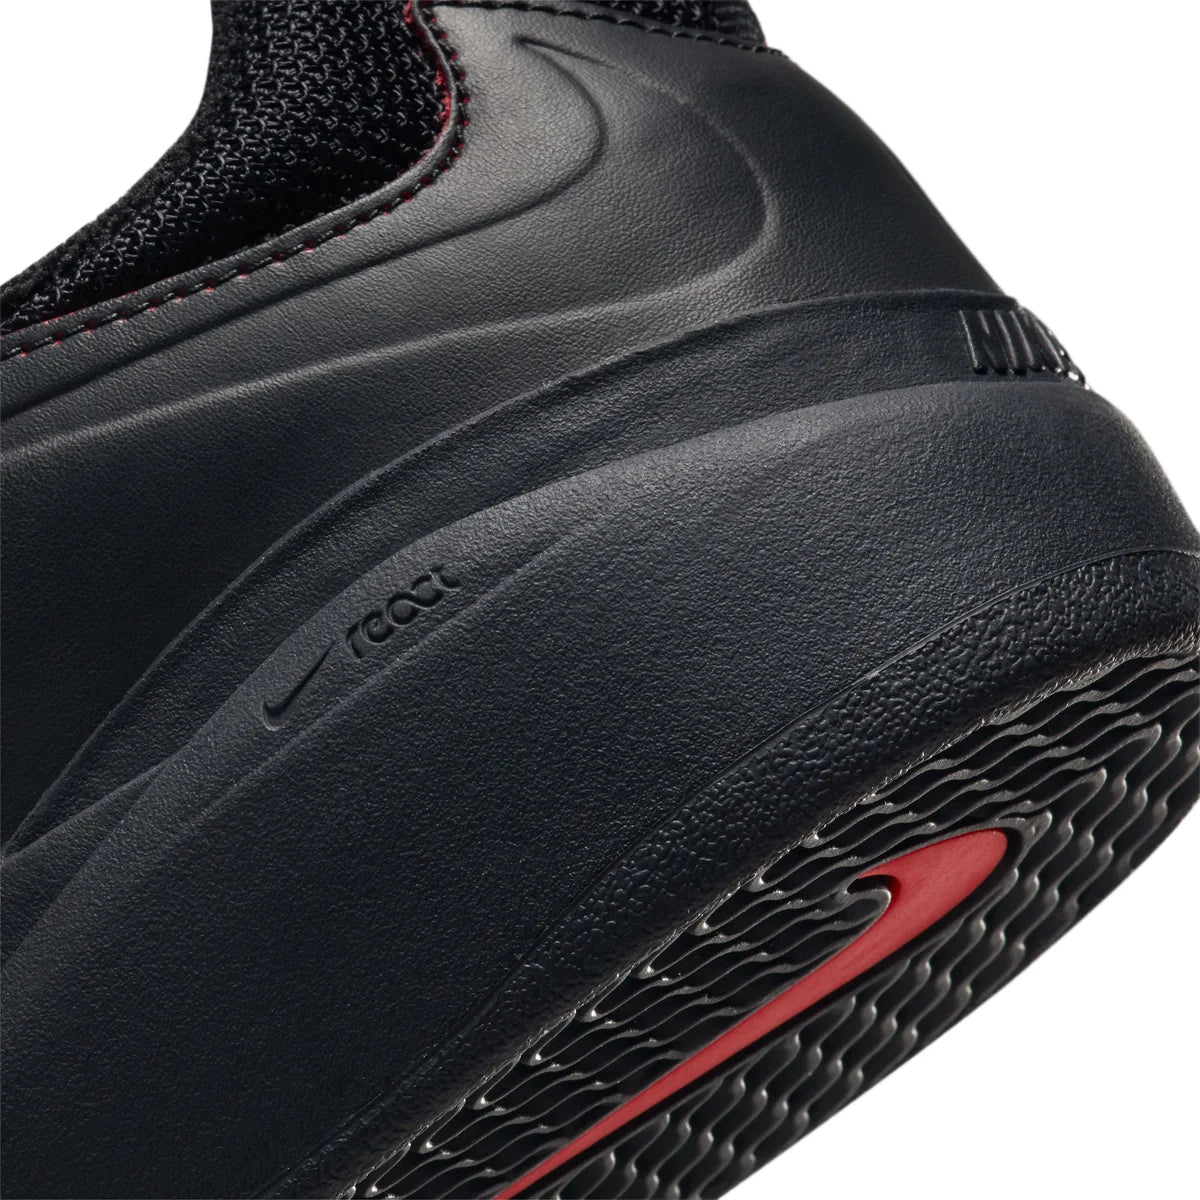 Nike SB Ishod Premium in Black/University Red - Goodnews Skateshop